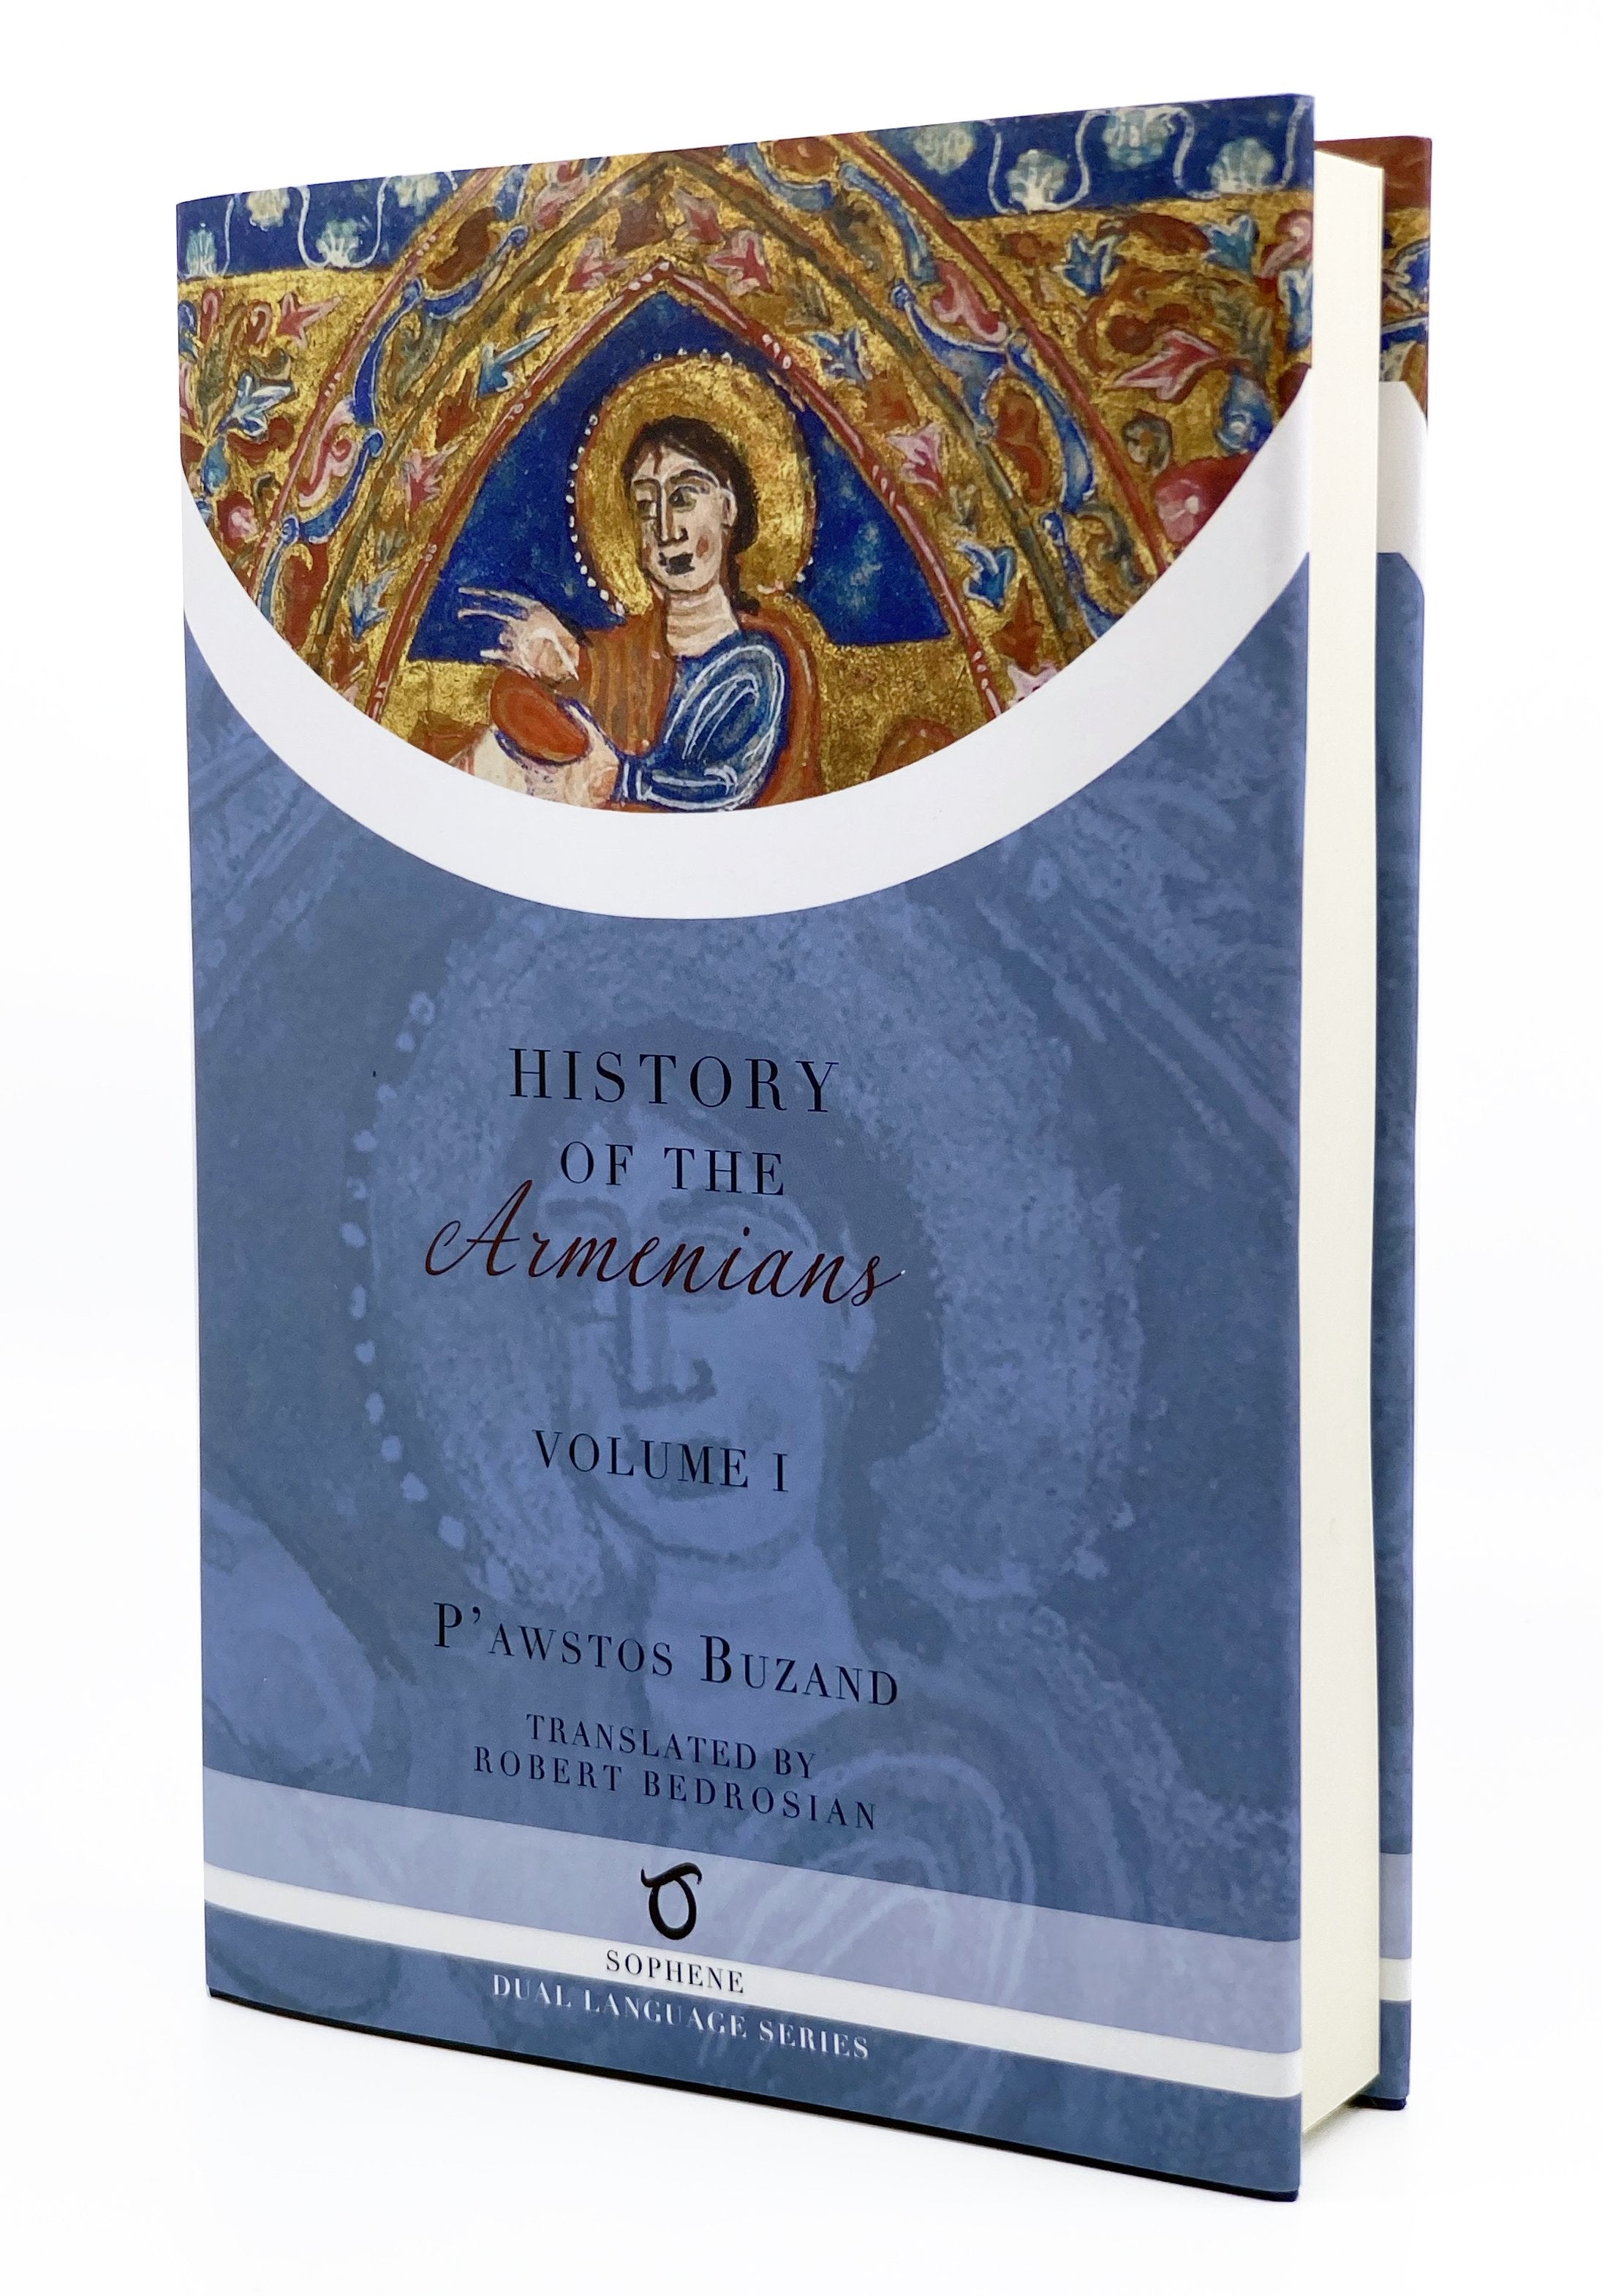 P'awstos Buzand's History of the Armenians (Complete Set)